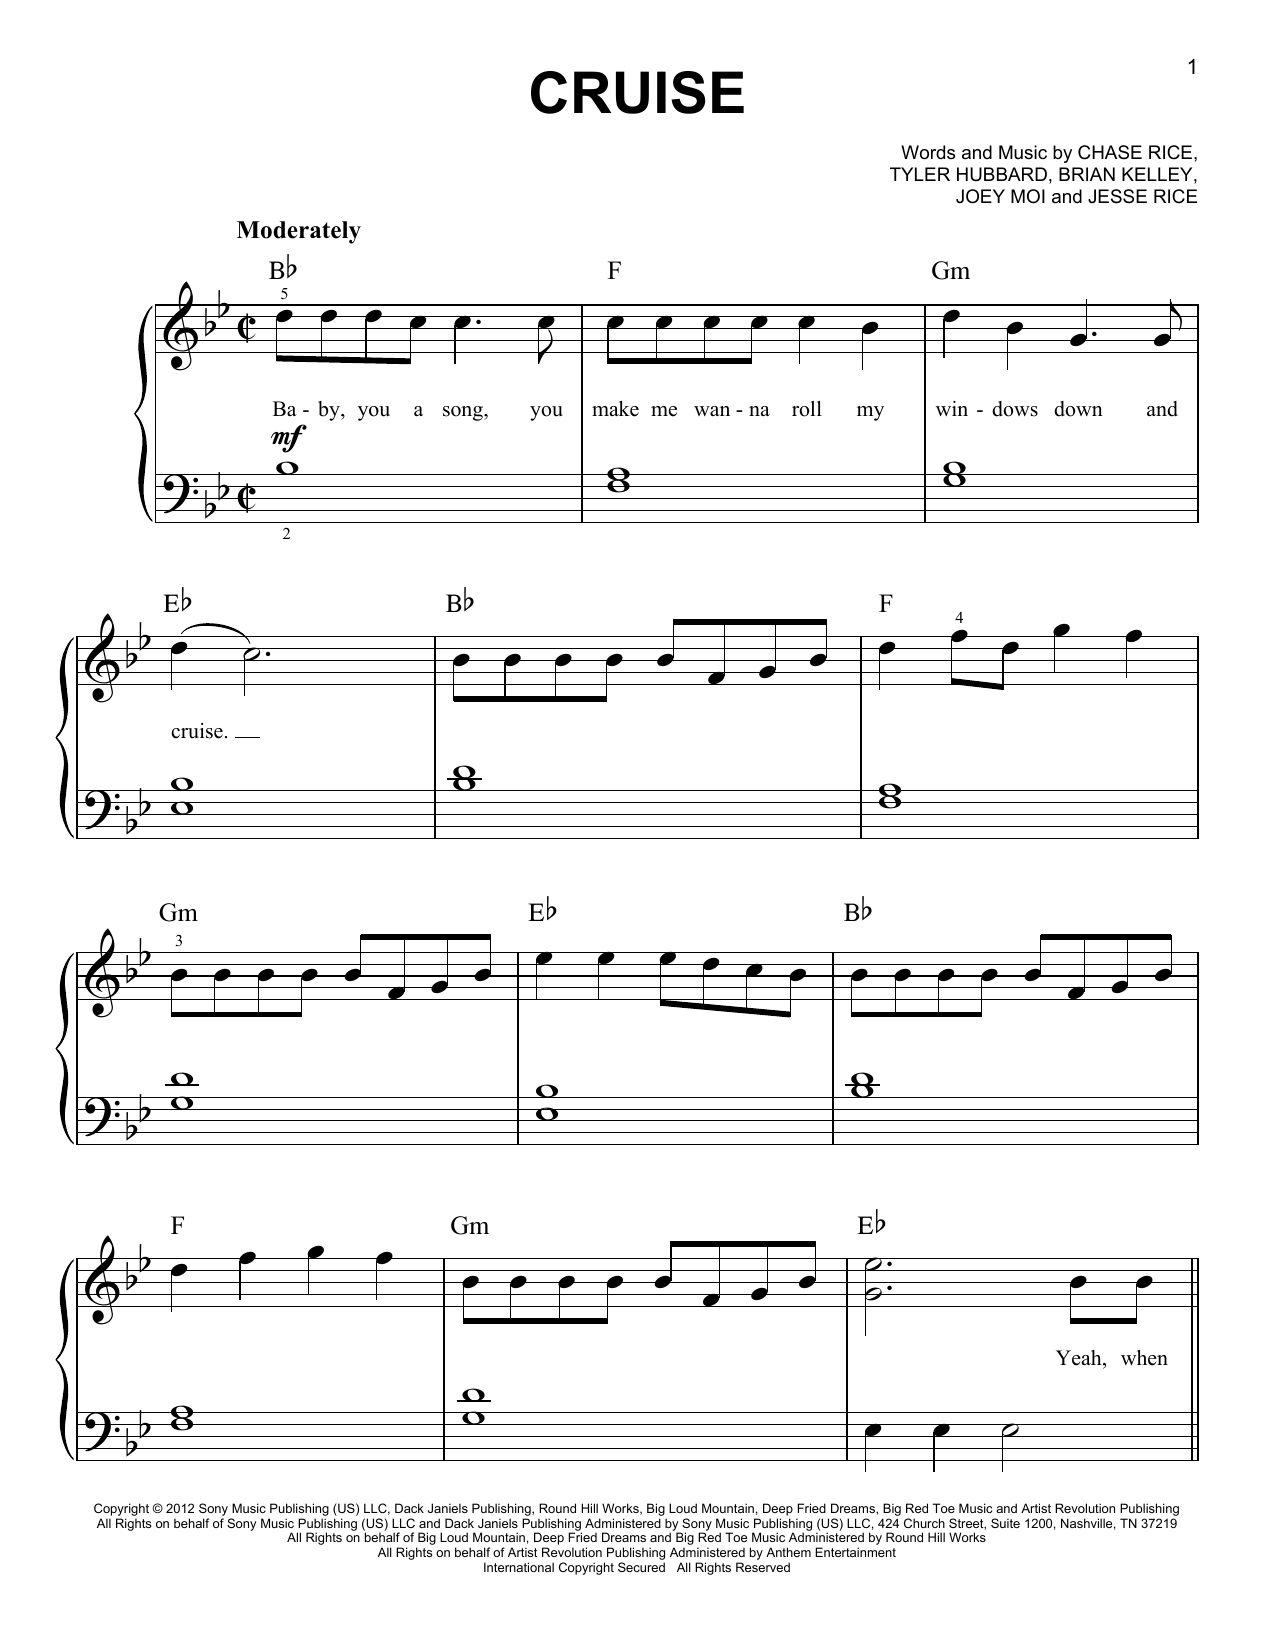 Florida Georgia Line Cruise Sheet Music Notes & Chords for Trombone - Download or Print PDF